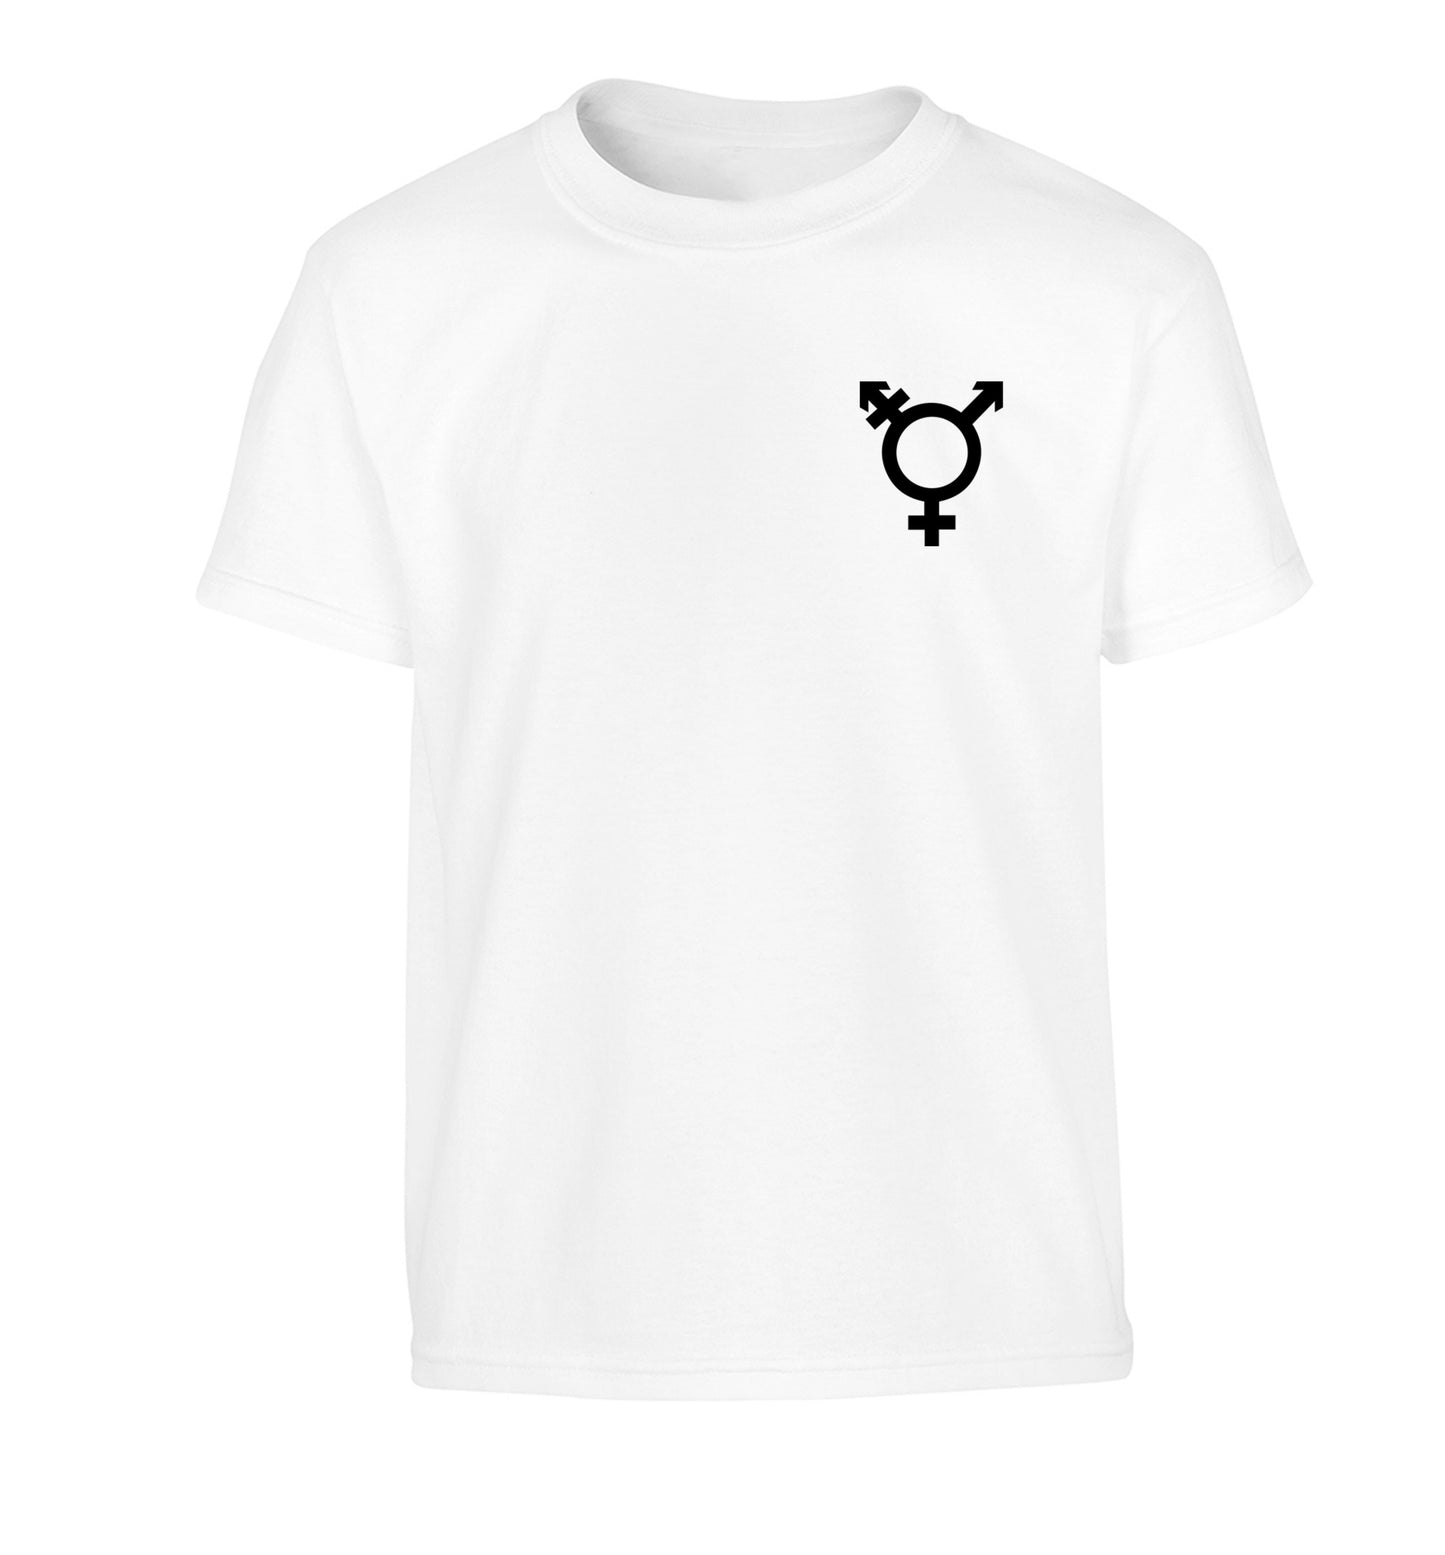 Trans gender symbol pocket Children's white Tshirt 12-14 Years